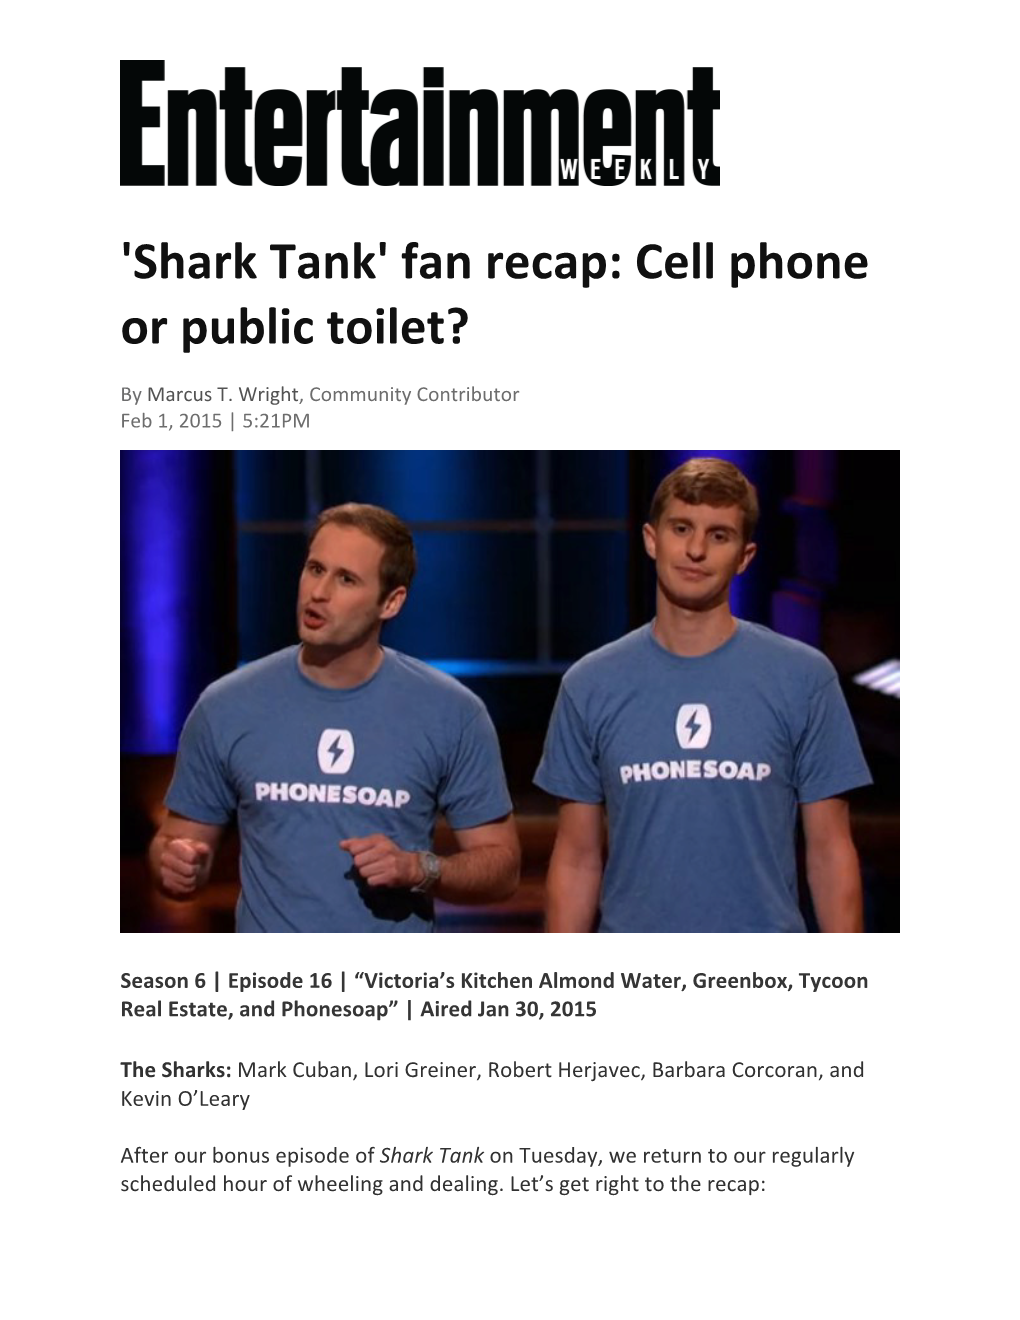 Shark Tank' Fan Recap: Cell Phone Or Public Toilet?